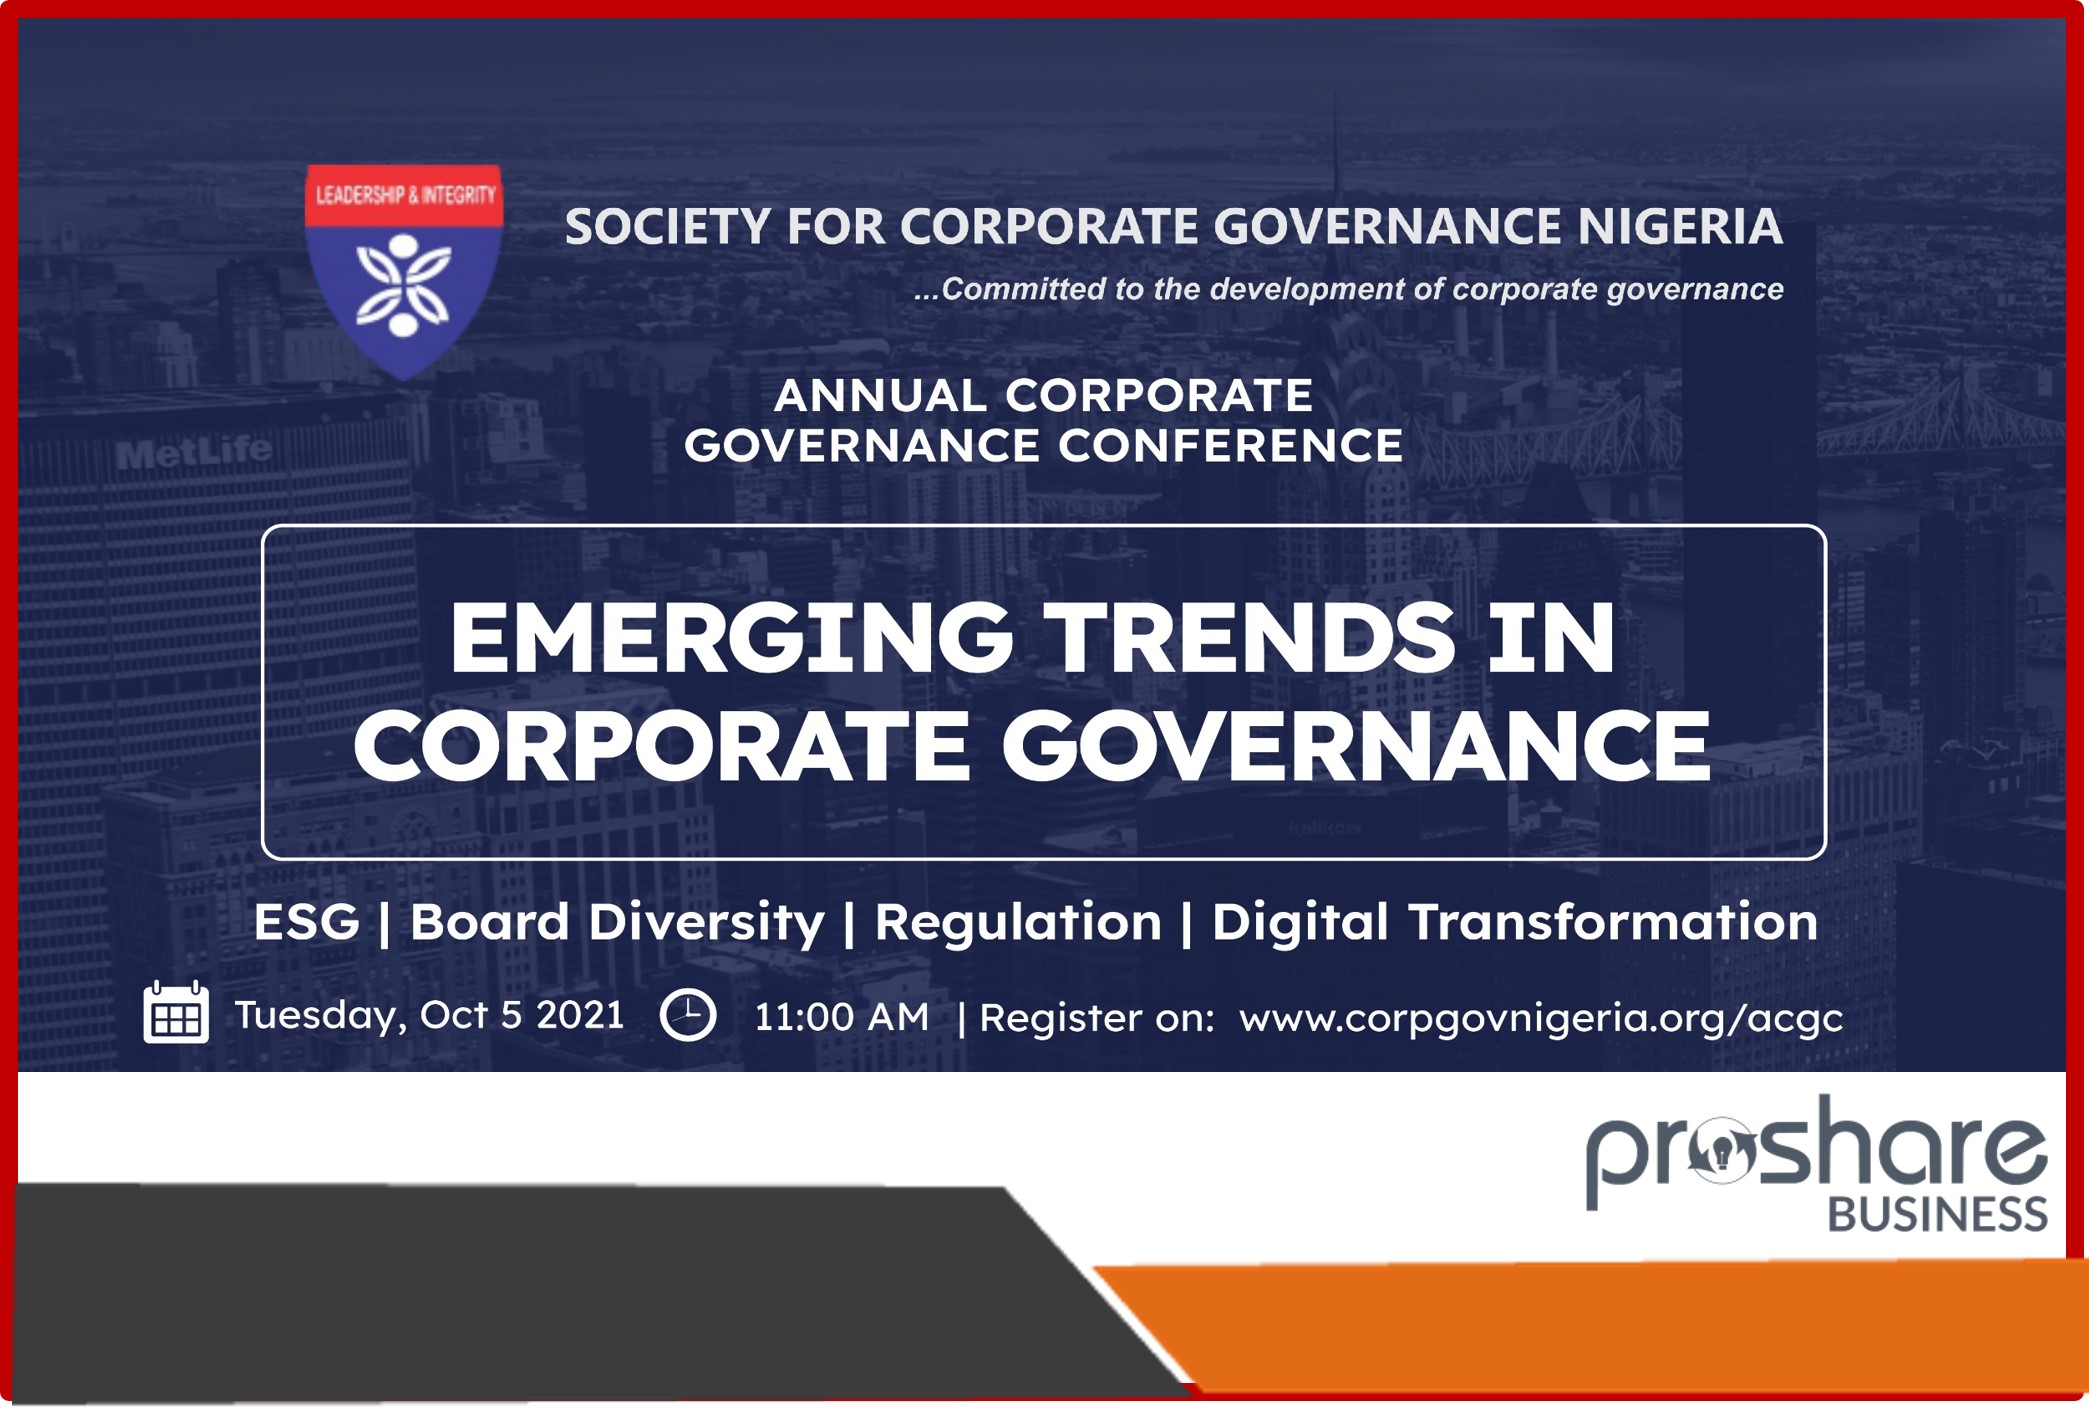 Society for Corporate Governance Nigeria Hosts Annual Corporate Governance Conference